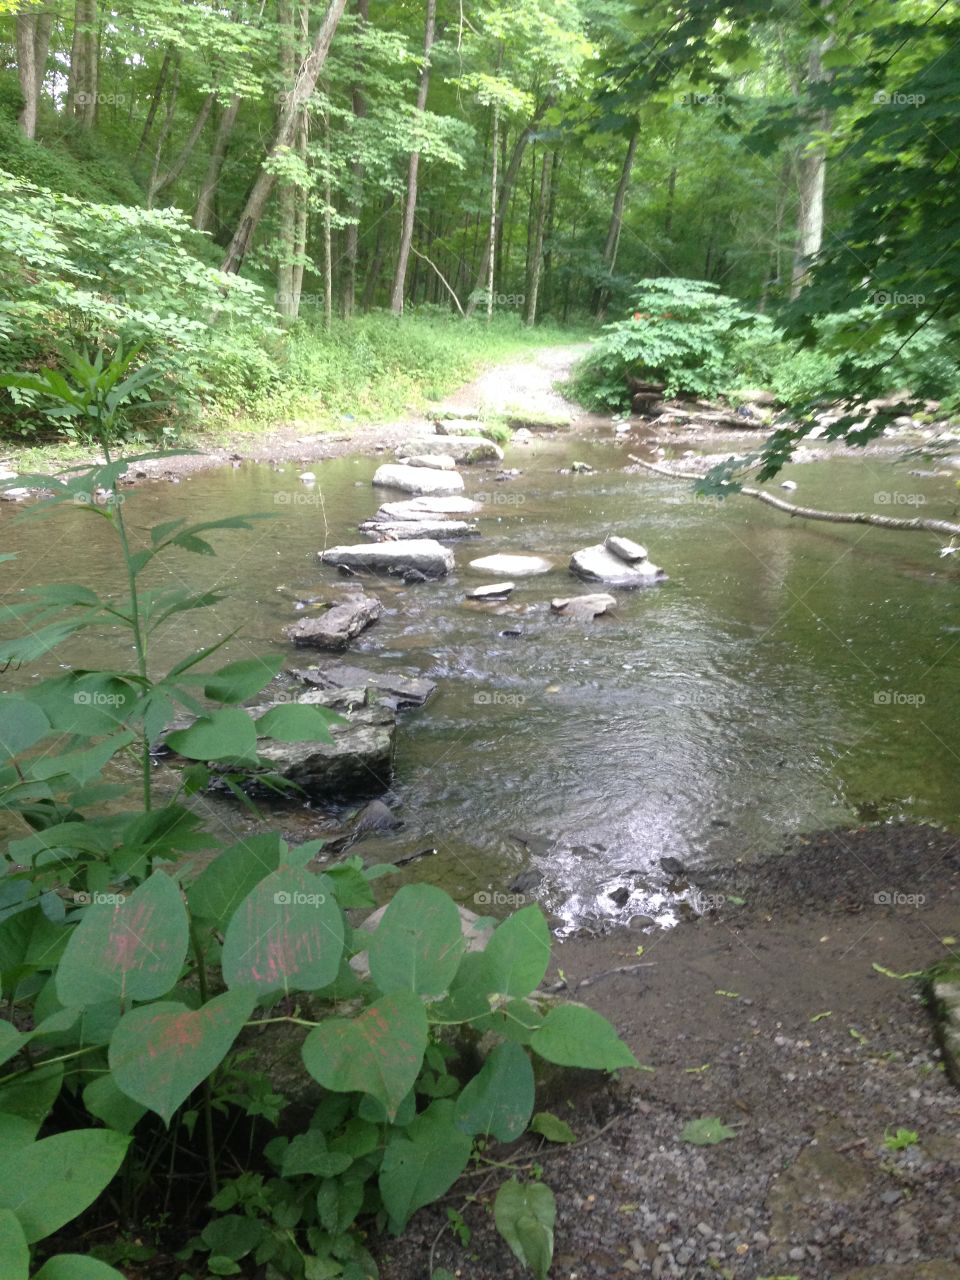 Rock trail across the stream 